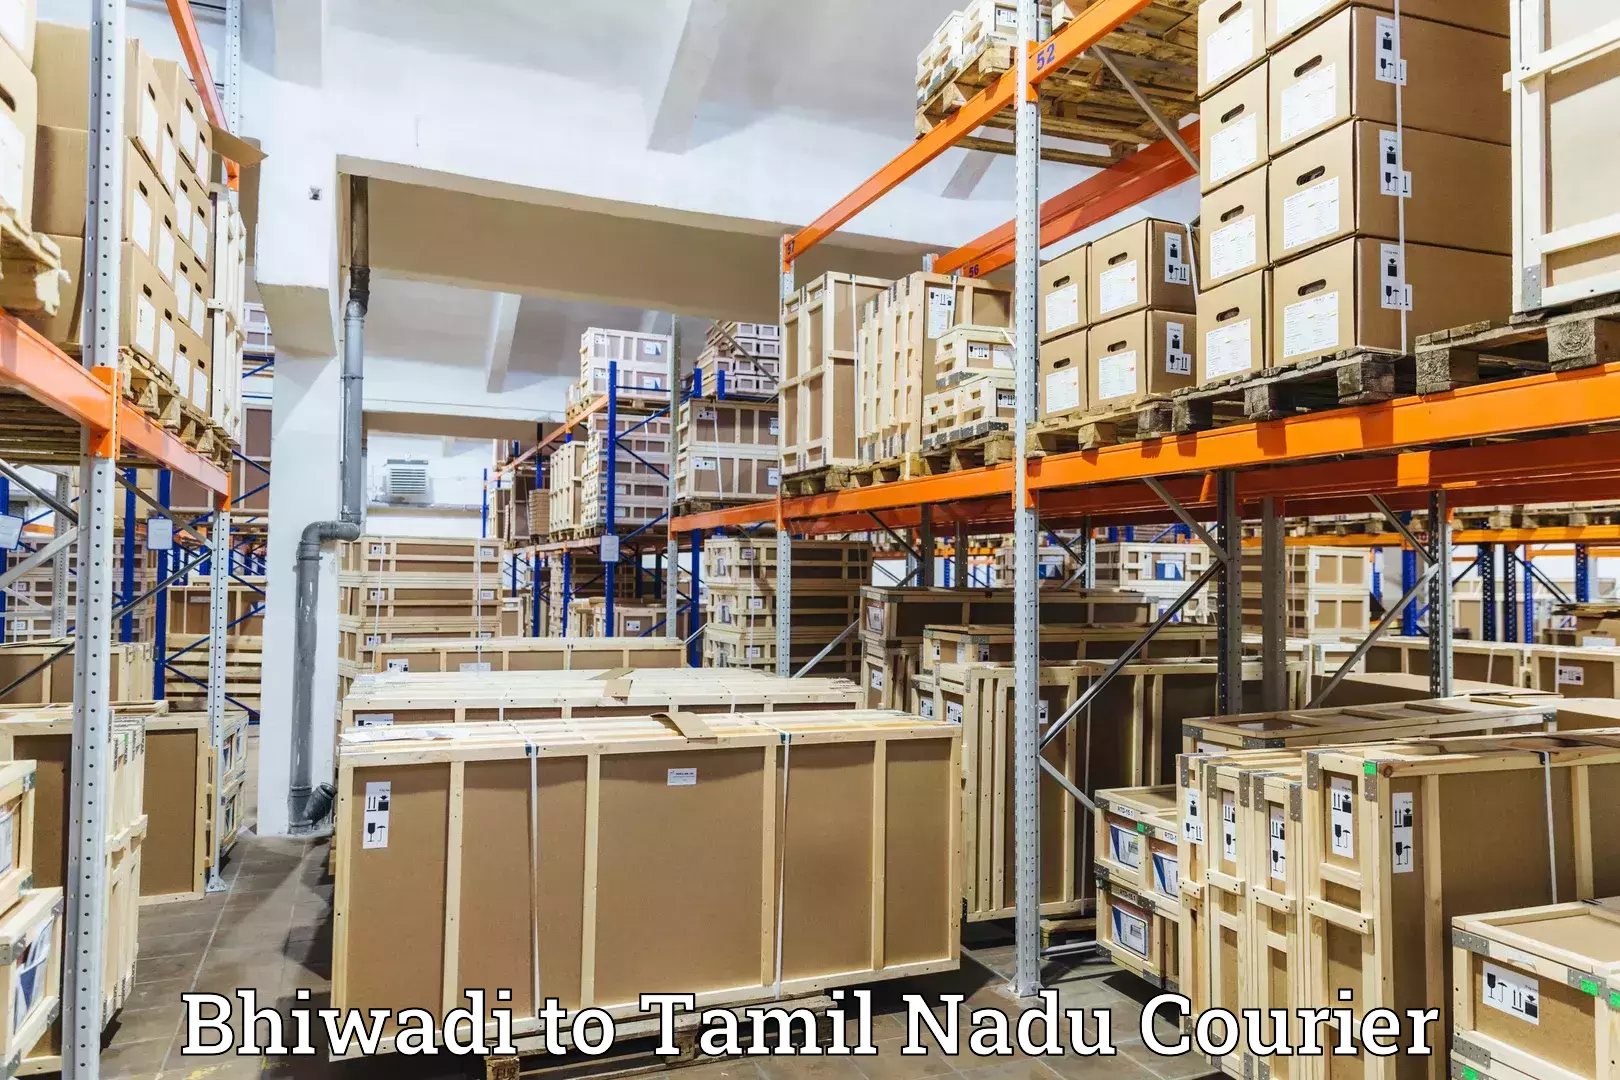 Delivery service partnership Bhiwadi to Thiruvadanai